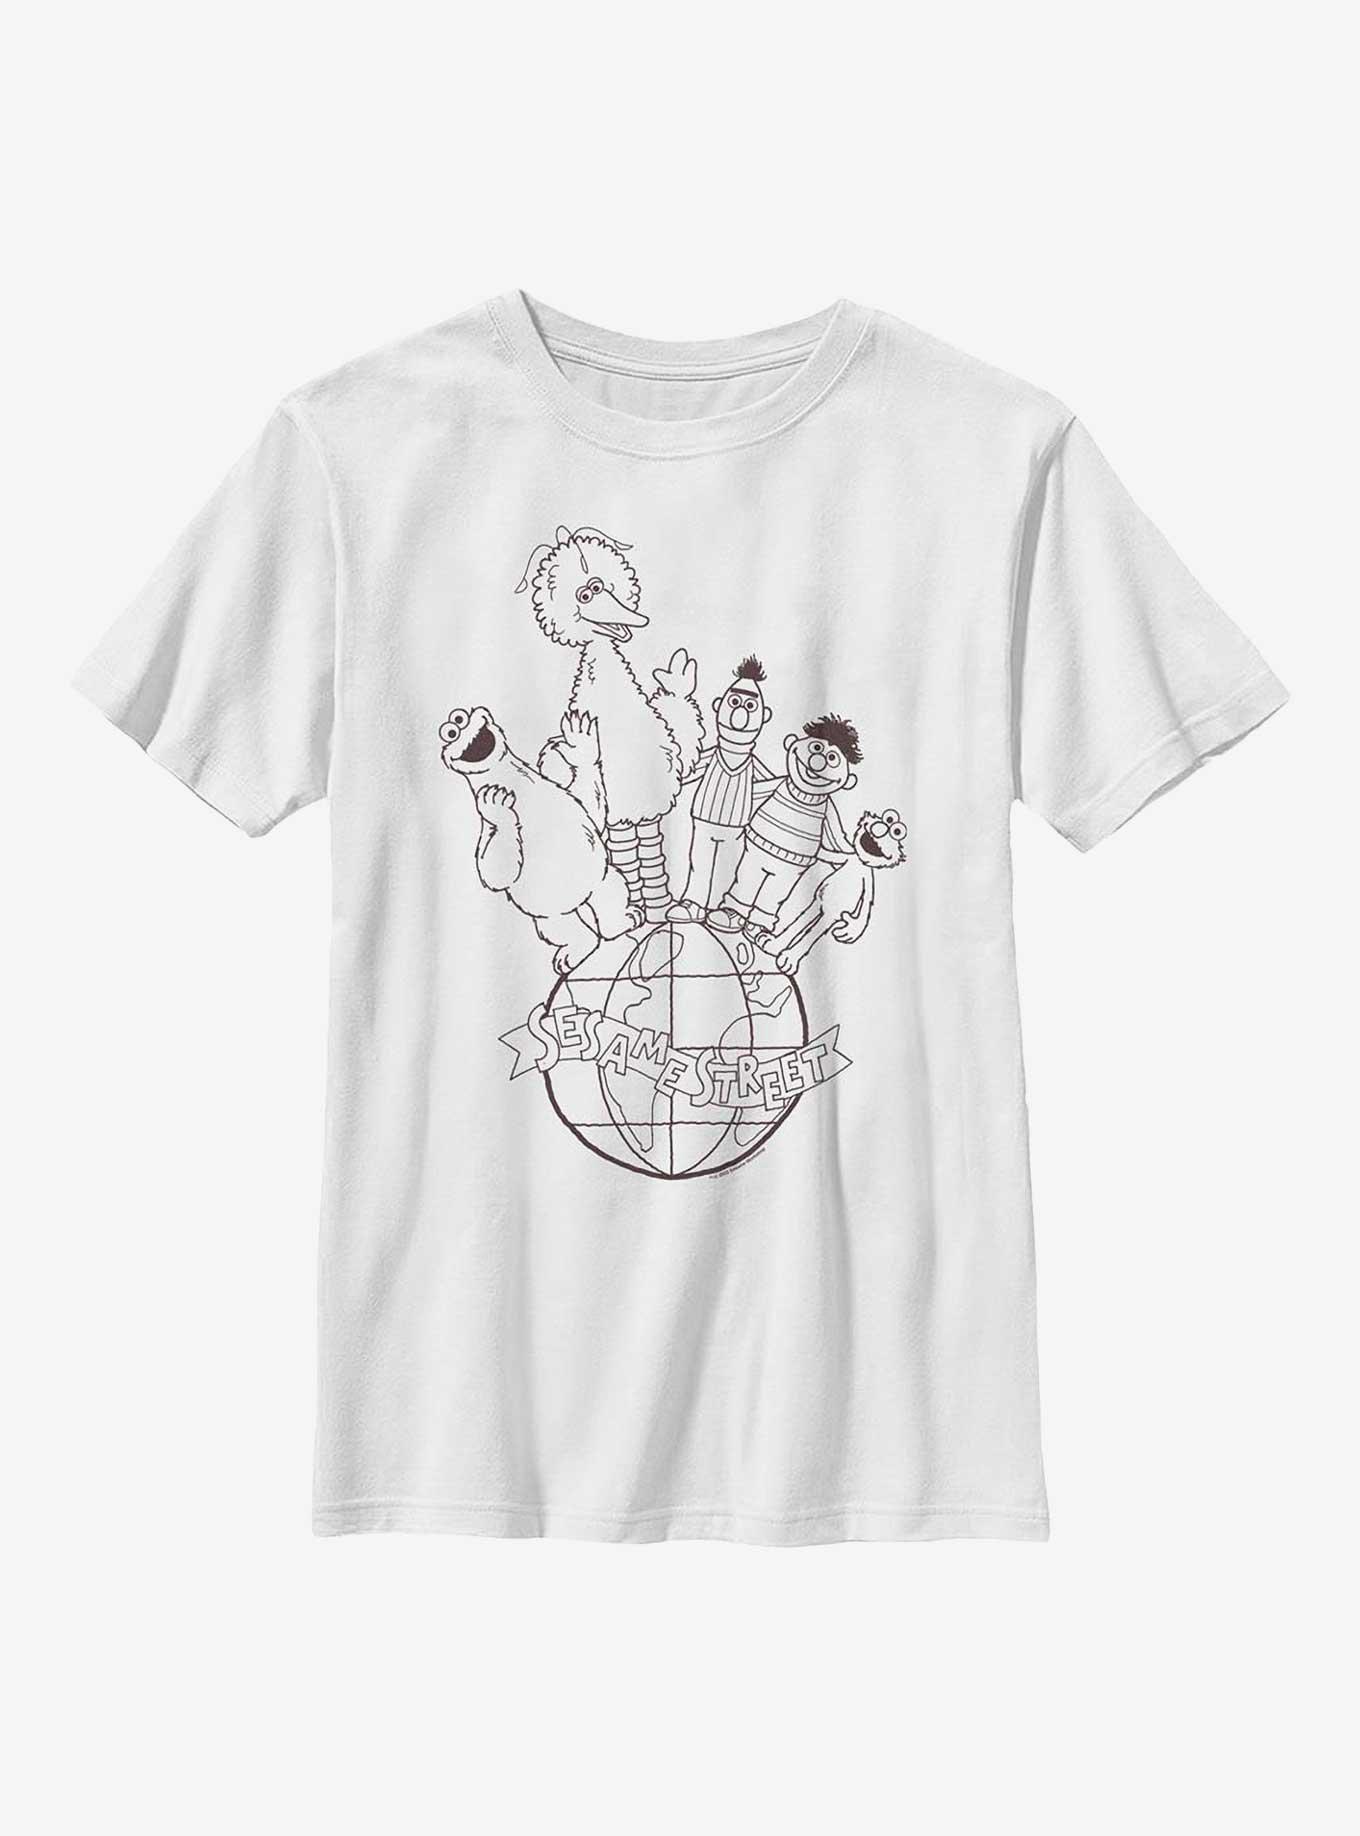 Sesame Street Globe Youth T-Shirt, WHITE, hi-res